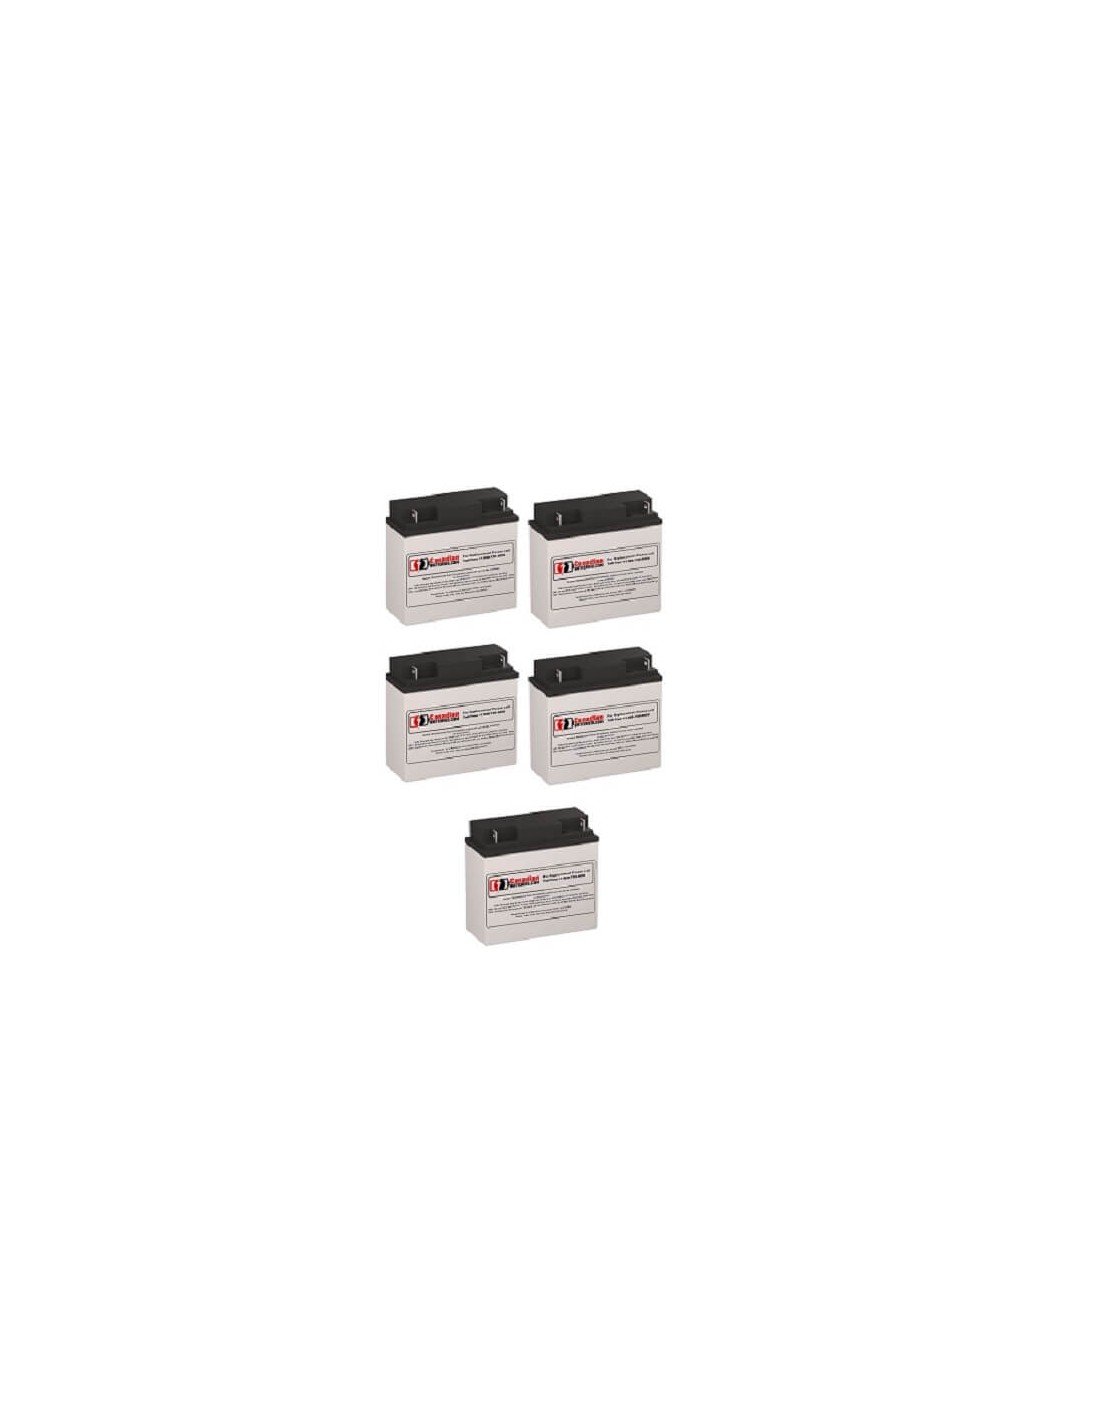 Batteries for Mitsubishi 7011a-20 UPS, 5 x 12V, 18Ah - 216Wh